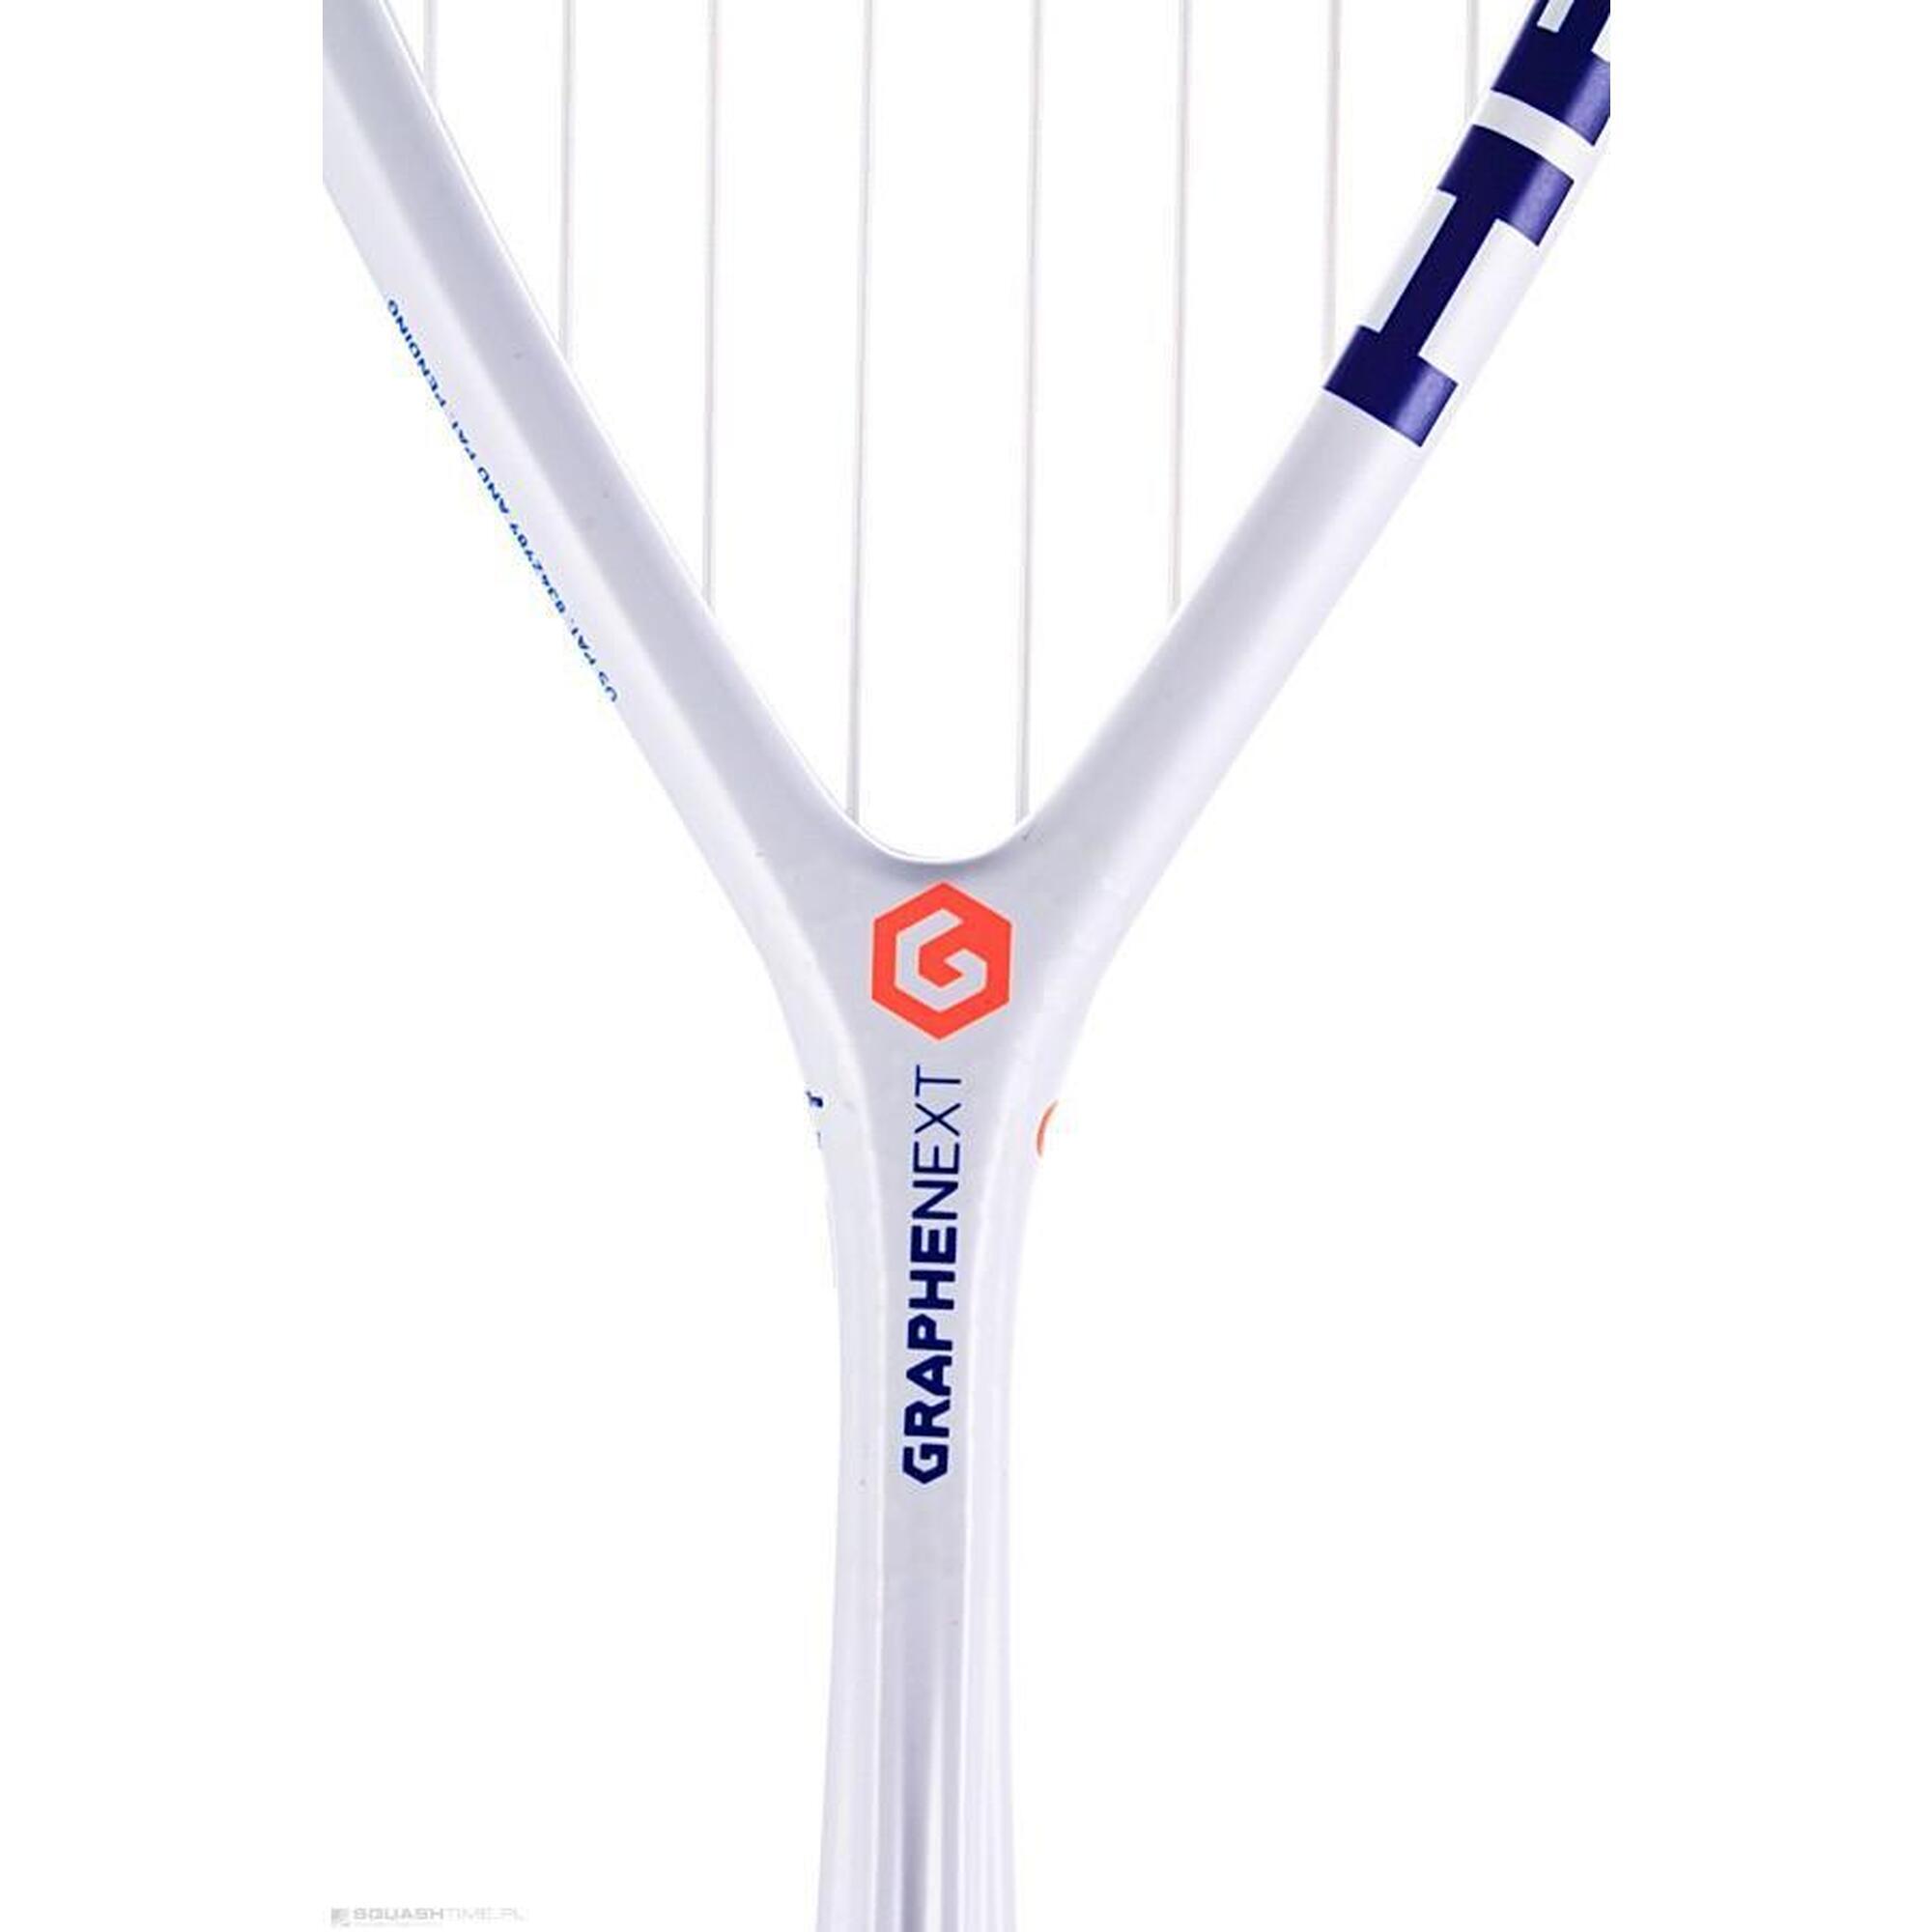 Graphene XT Cyano 110 Unisex Carbon Fiber Squash Racket - White